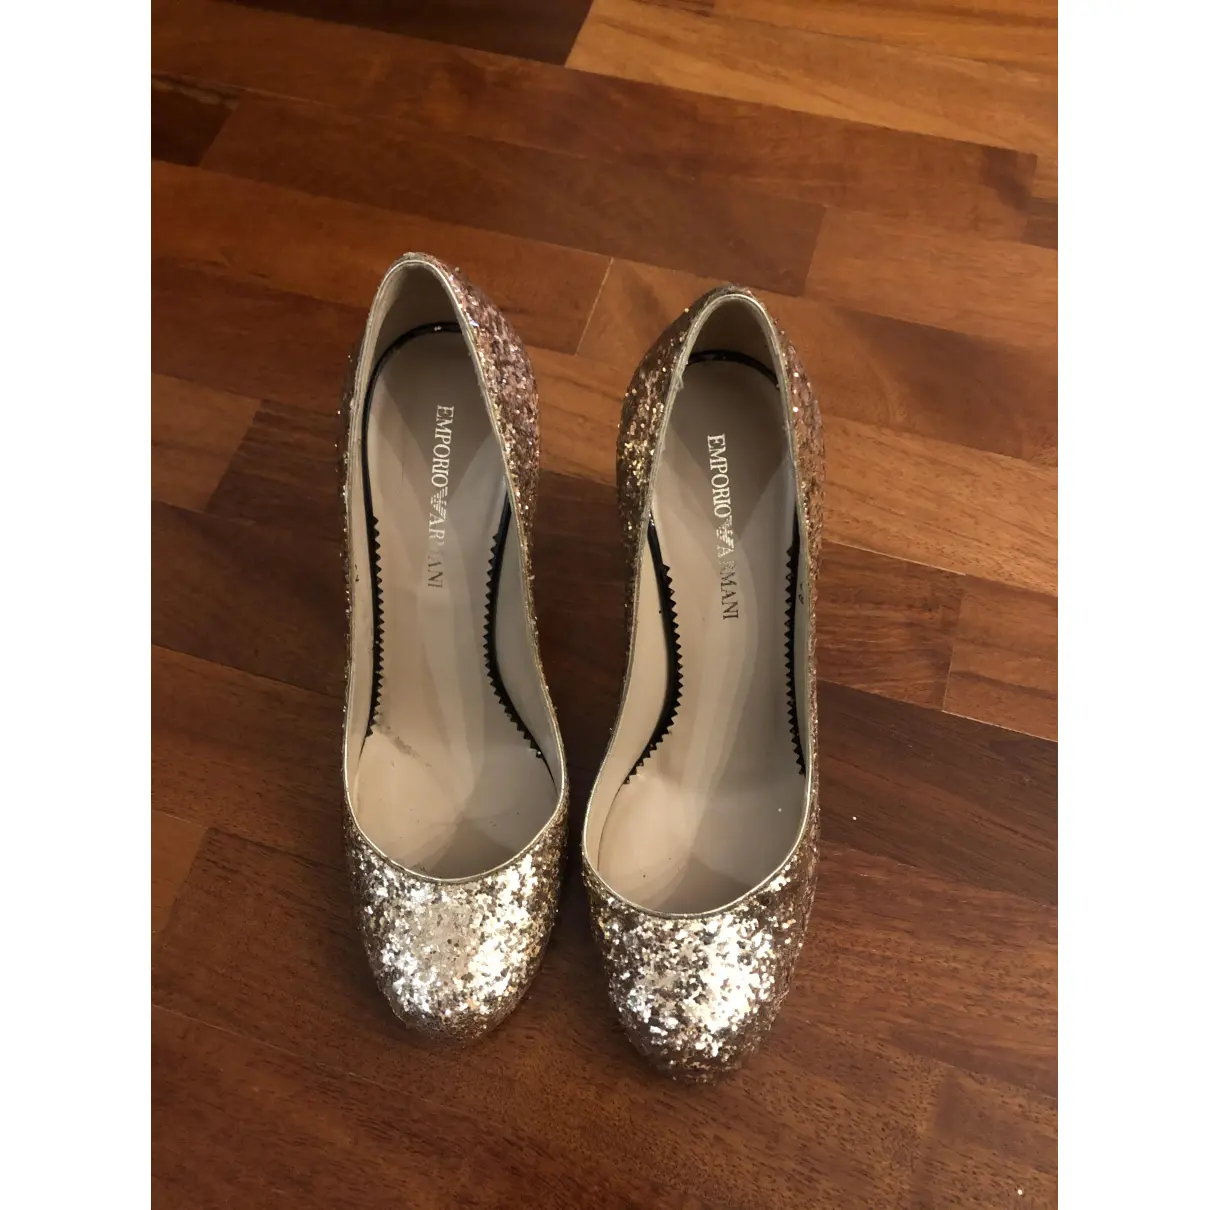 Buy Emporio Armani Glitter heels online